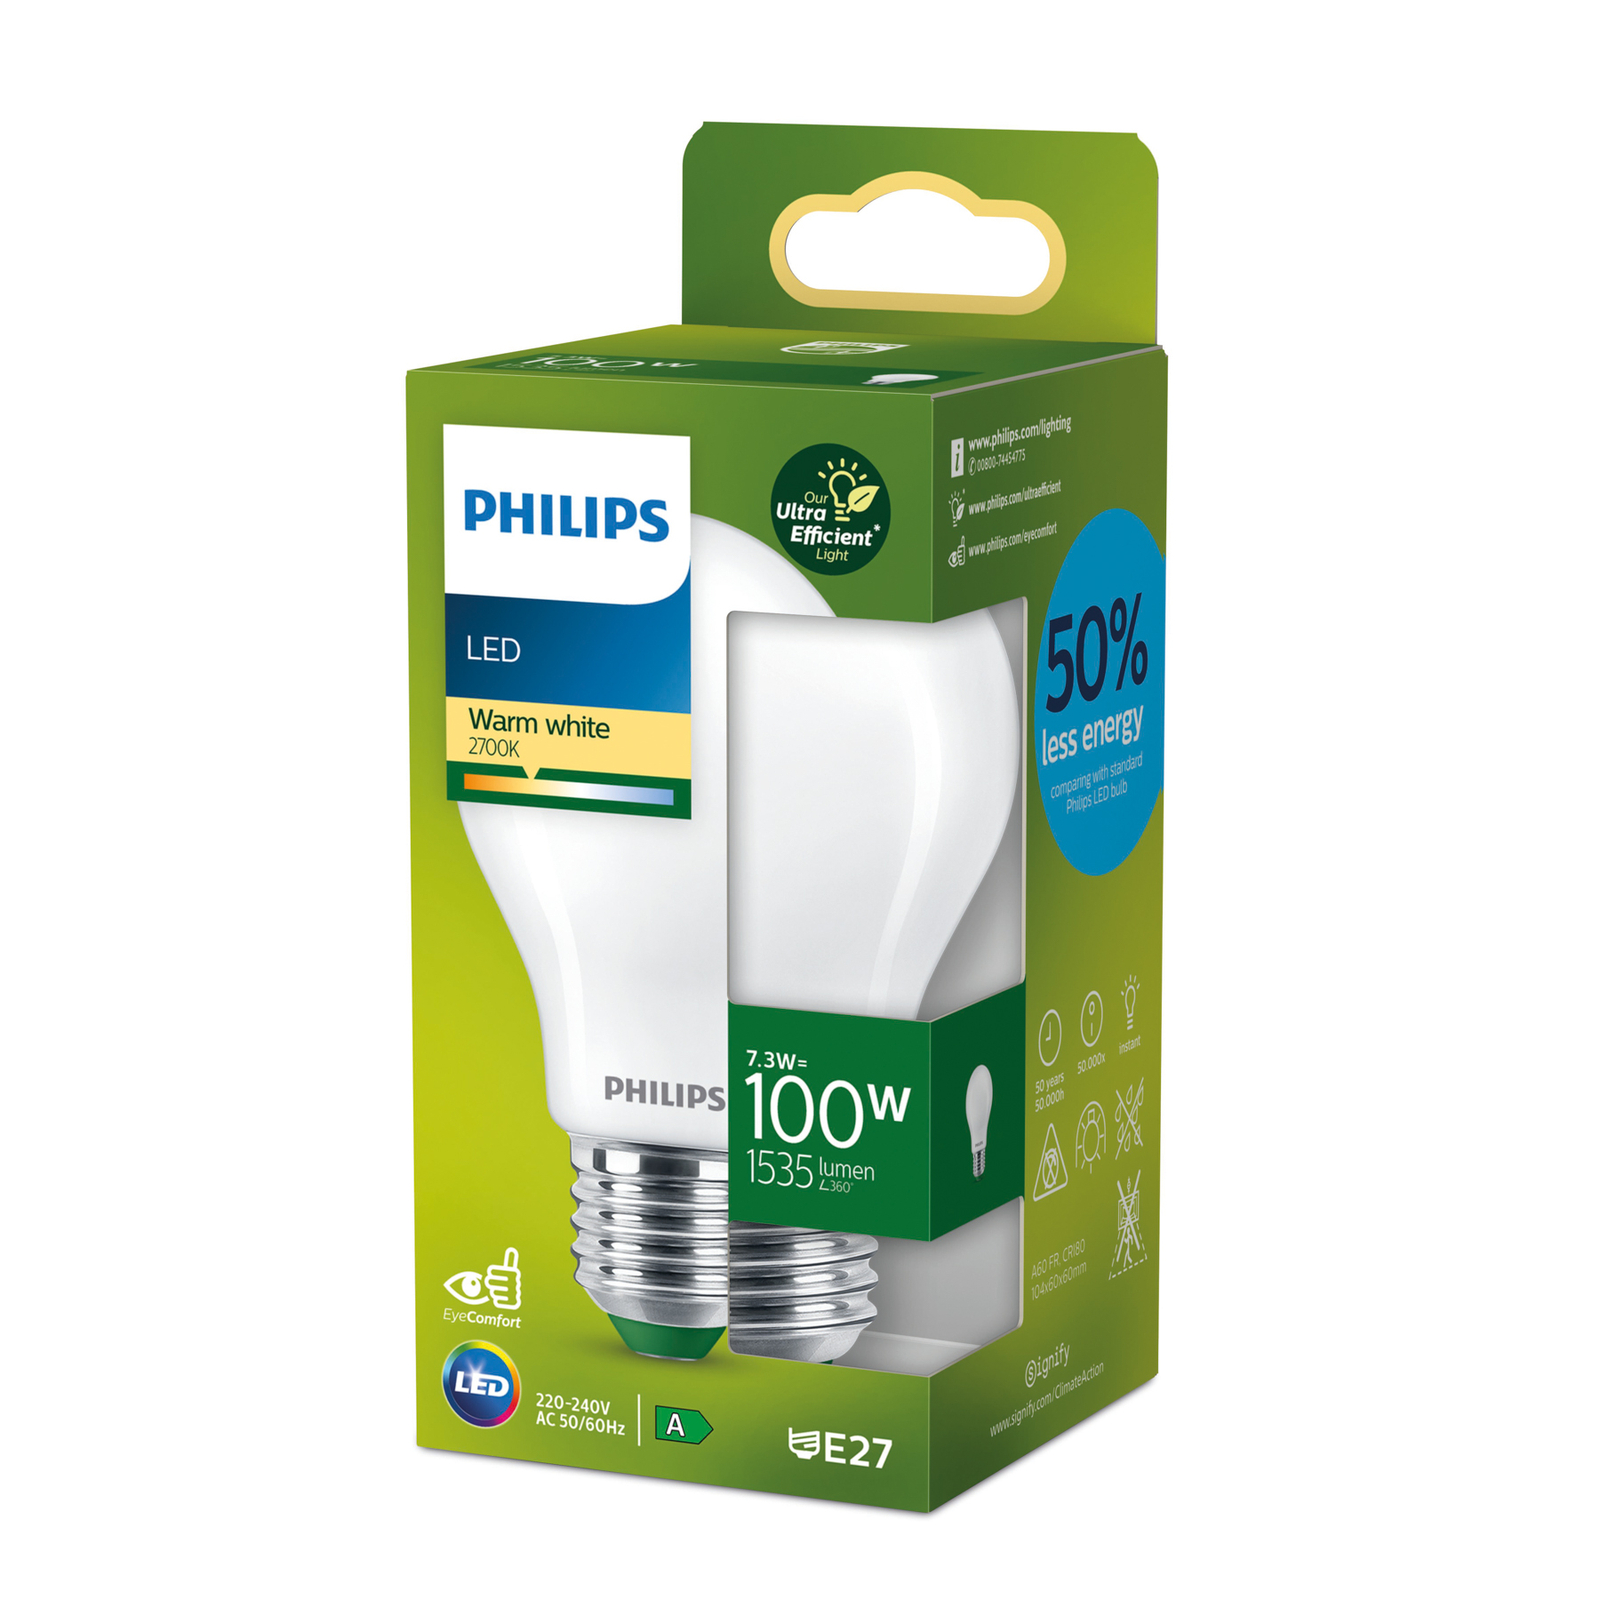 Philips E27 LED žárovka A60 7,3W 1535lm 2700K mat